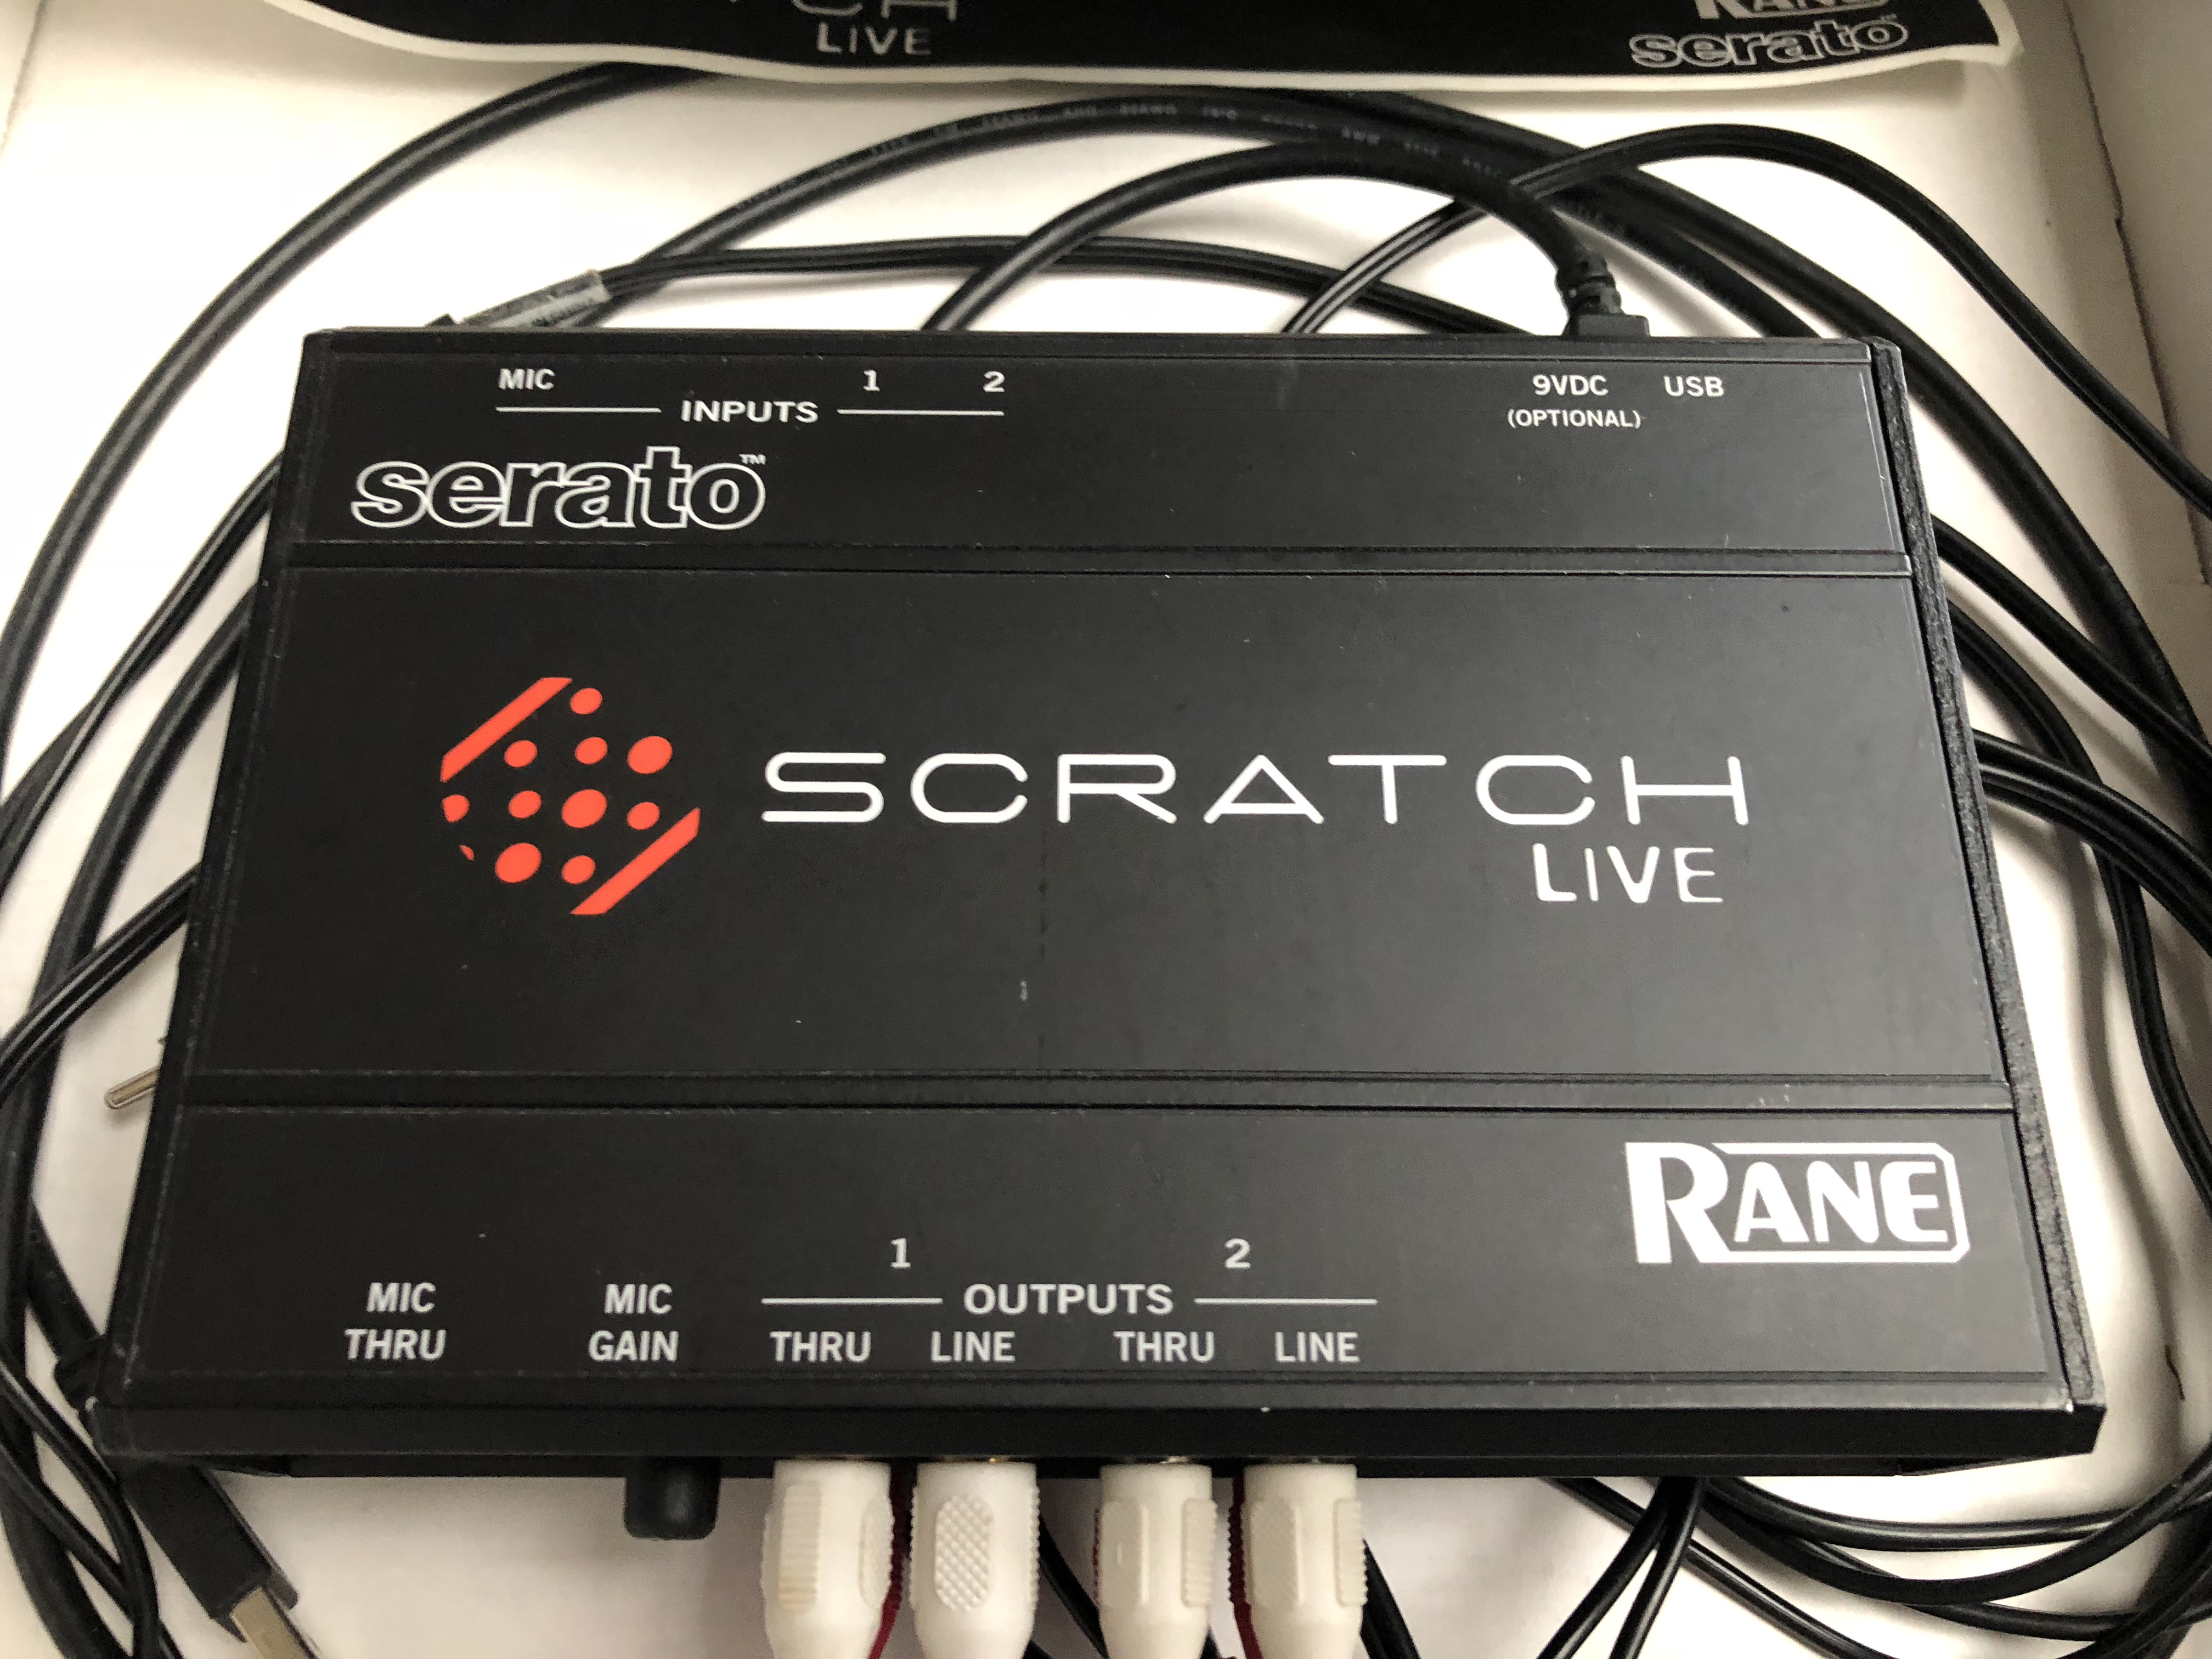 download serato scratch live 2.3 free for mac